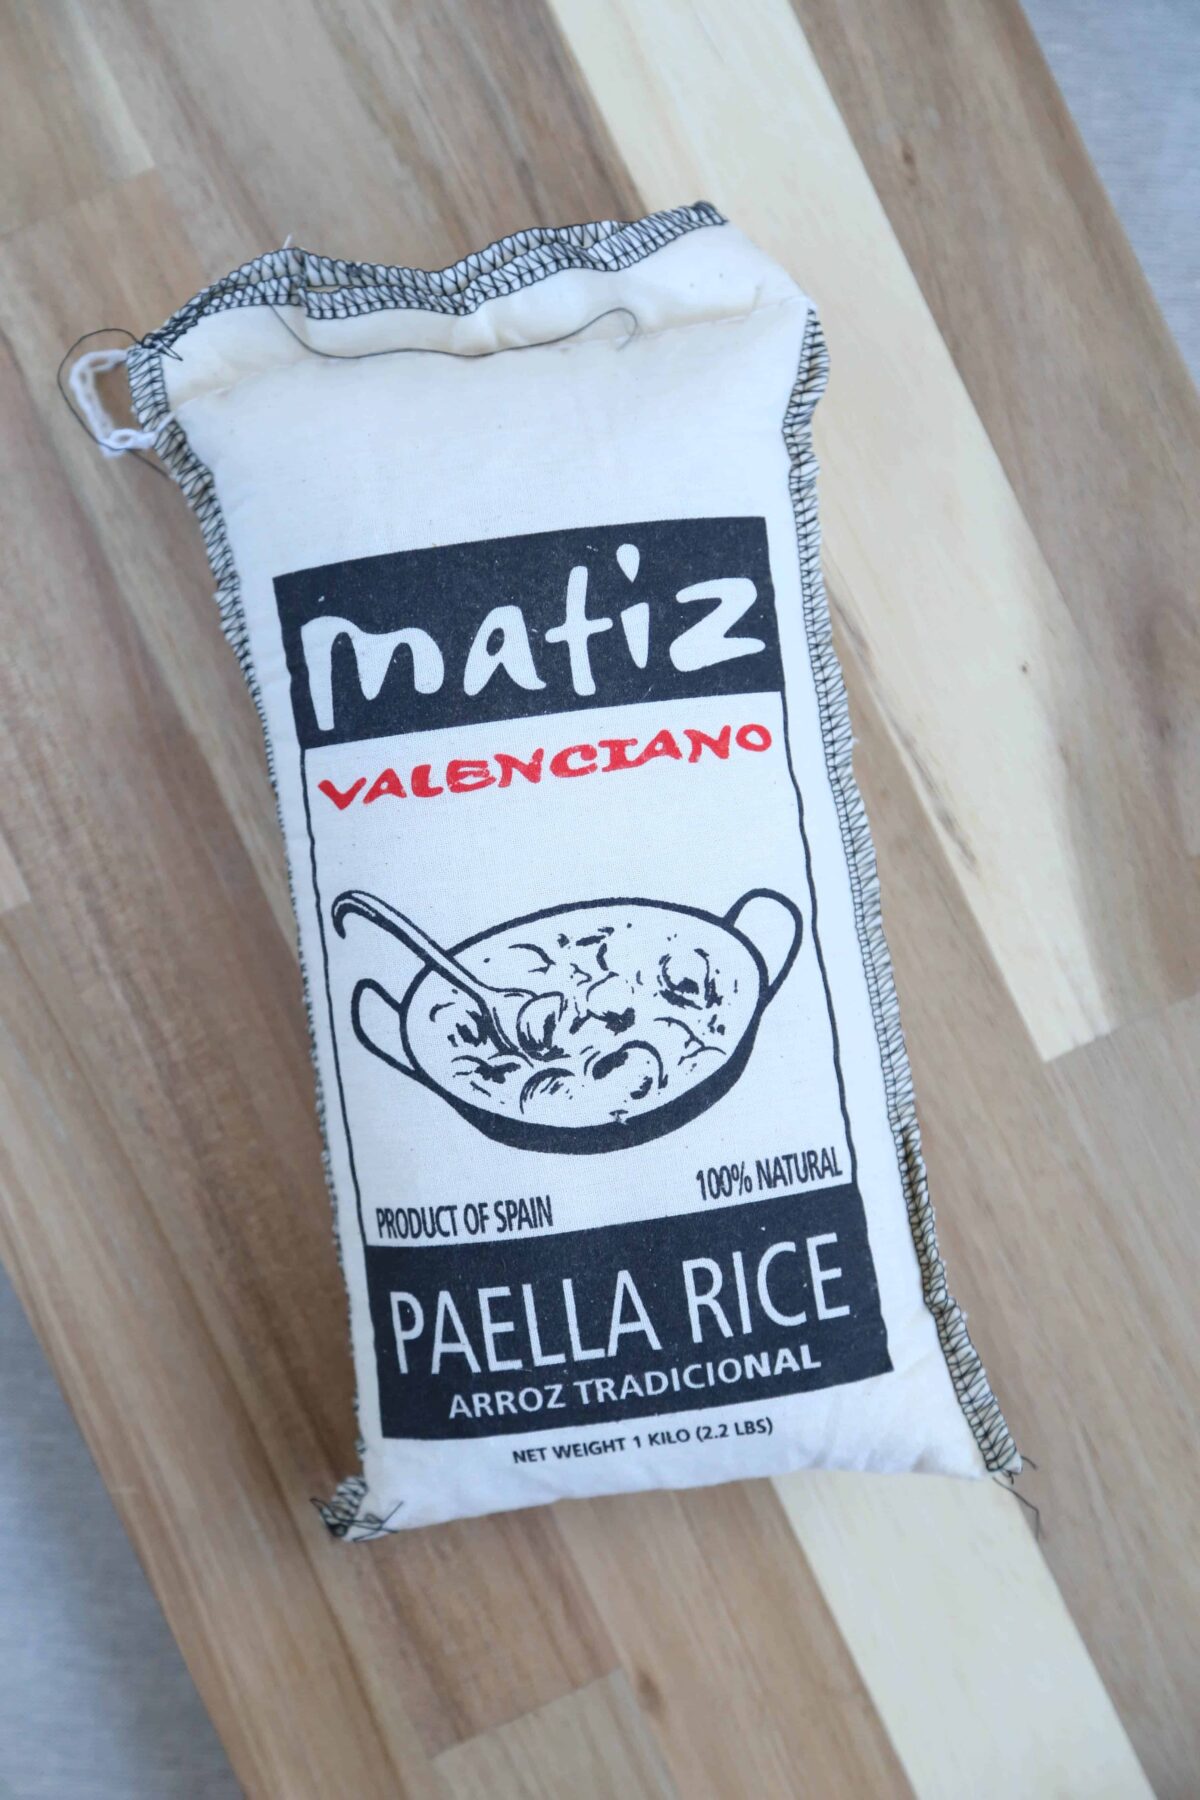 bag of matiz paella rice on a wooden cutting board.